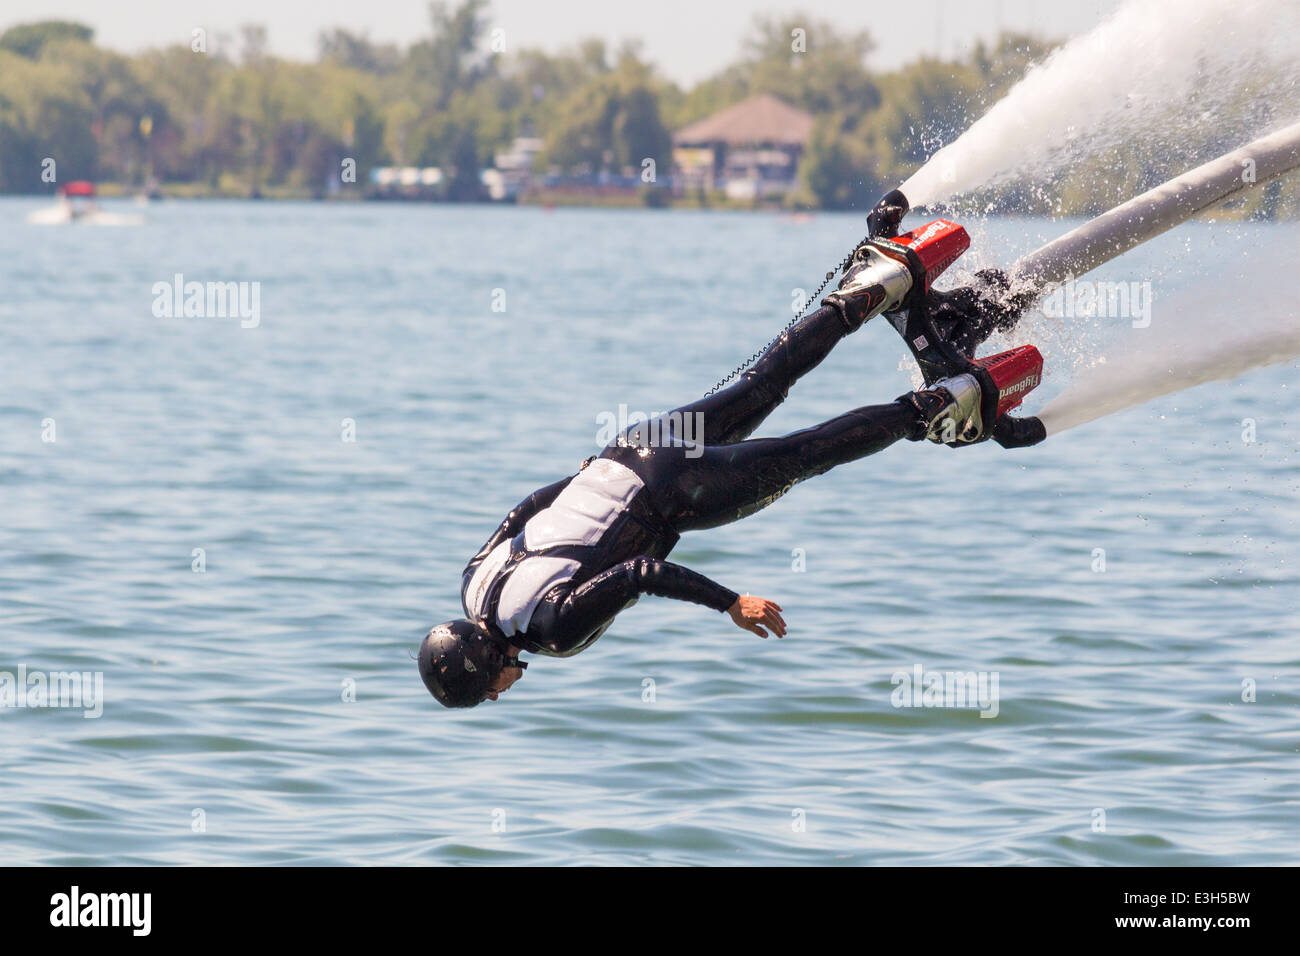 Homme flyboarder faisant le dauphin au championnat nord-américain de Flyboard à Toronto, Ontario, Canada Banque D'Images